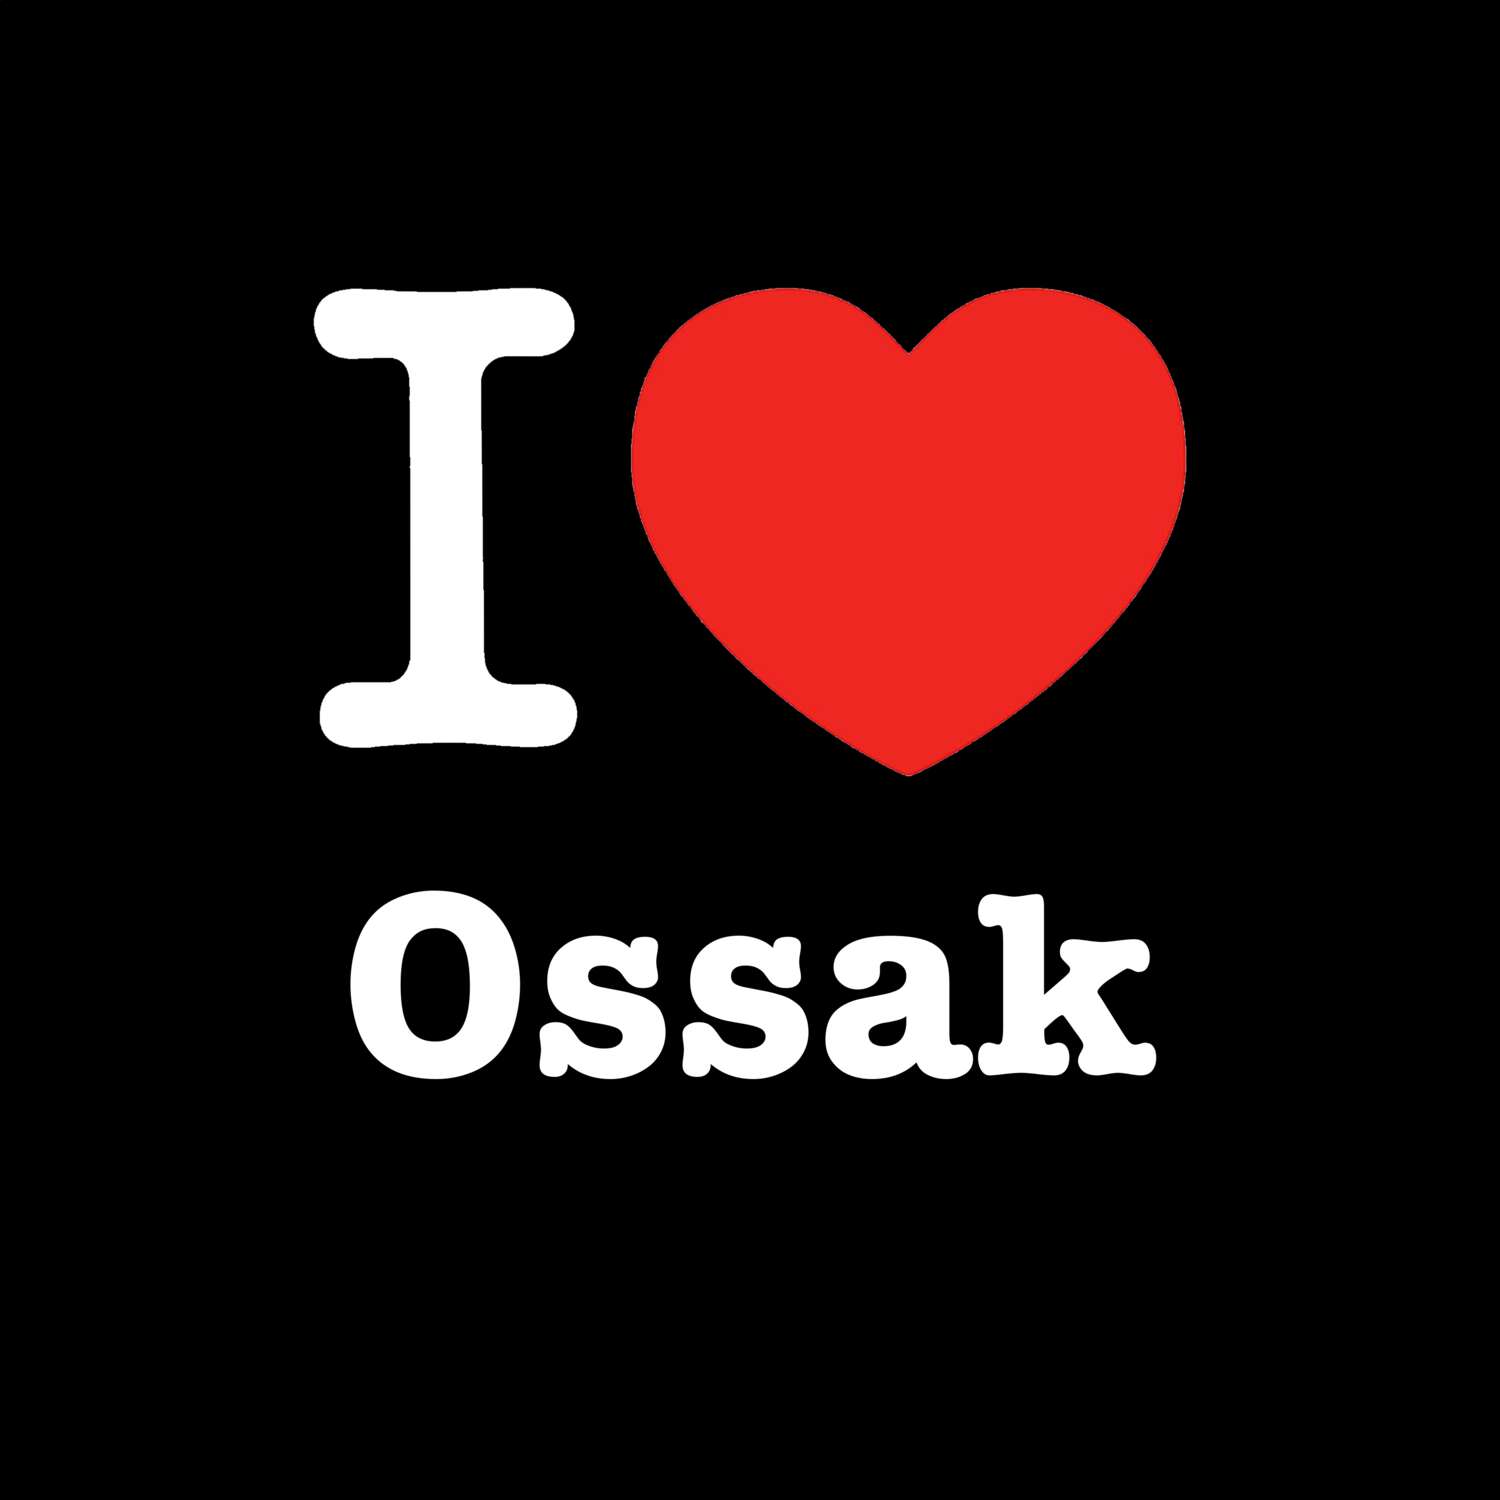 Ossak T-Shirt »I love«